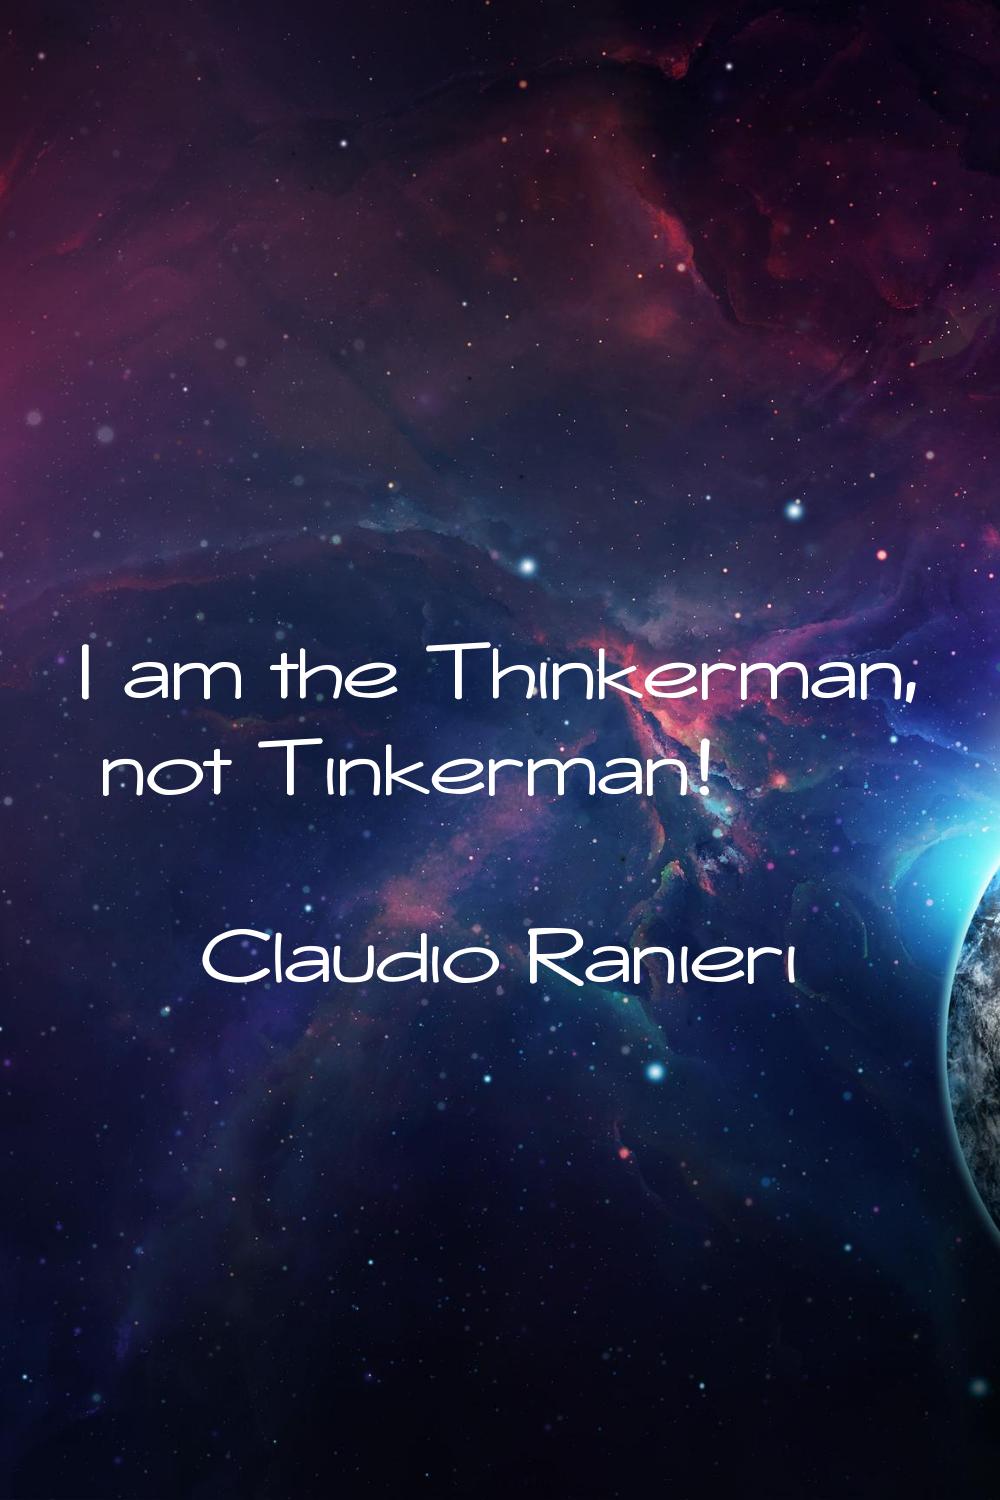 I am the Thinkerman, not Tinkerman!